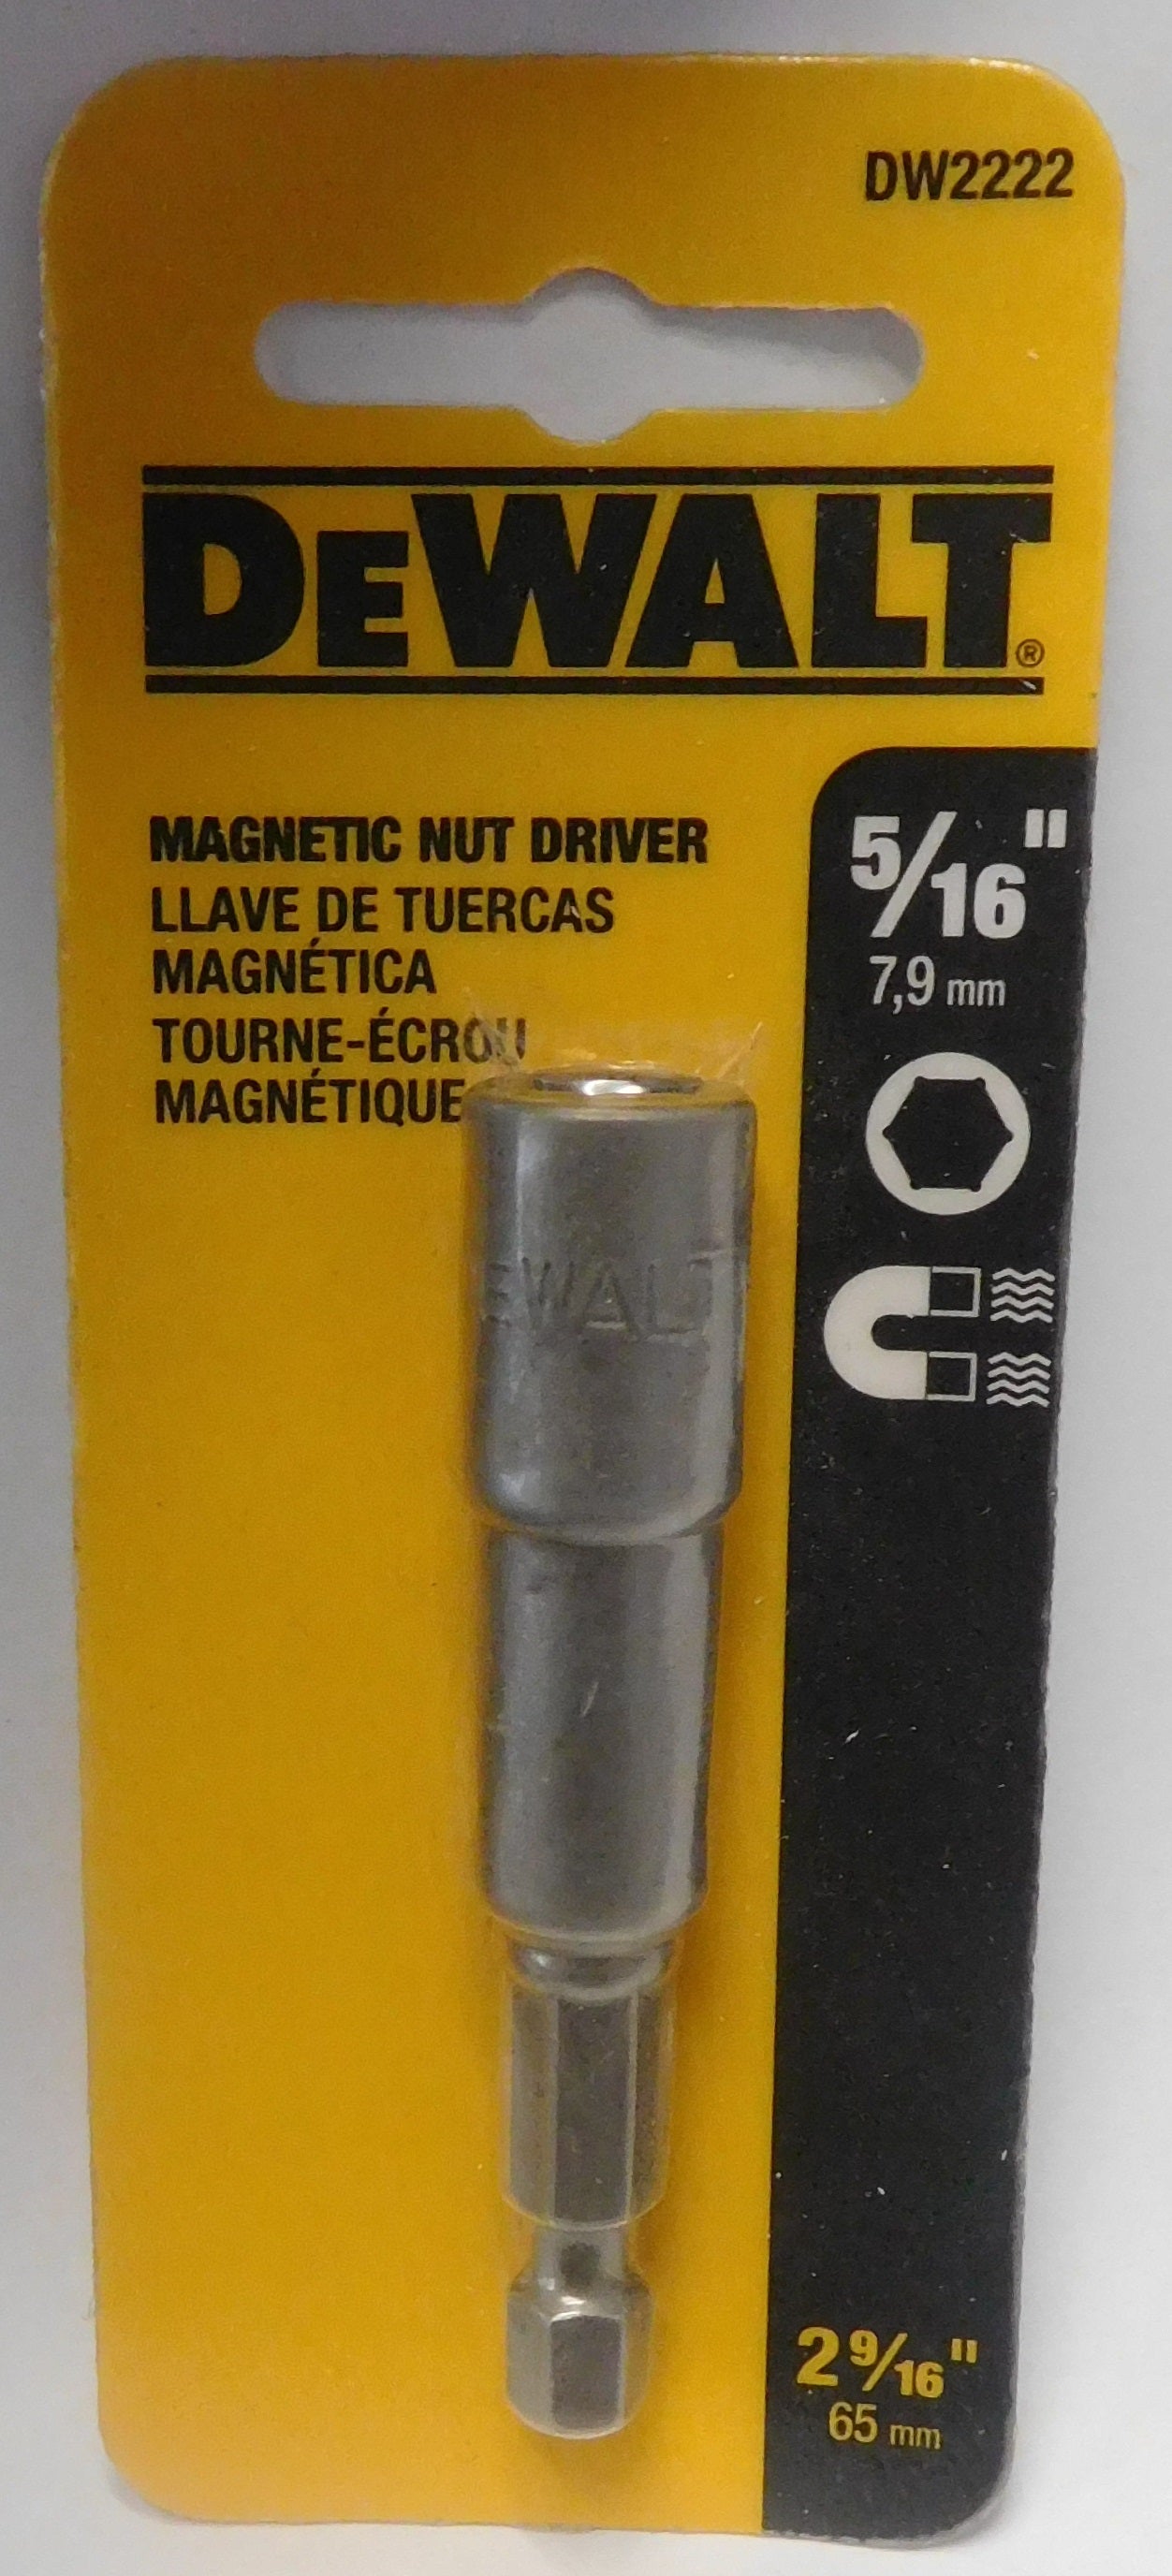 Dewalt DW2222 5/16" x 2-9/16" Magnetic Nut Driver